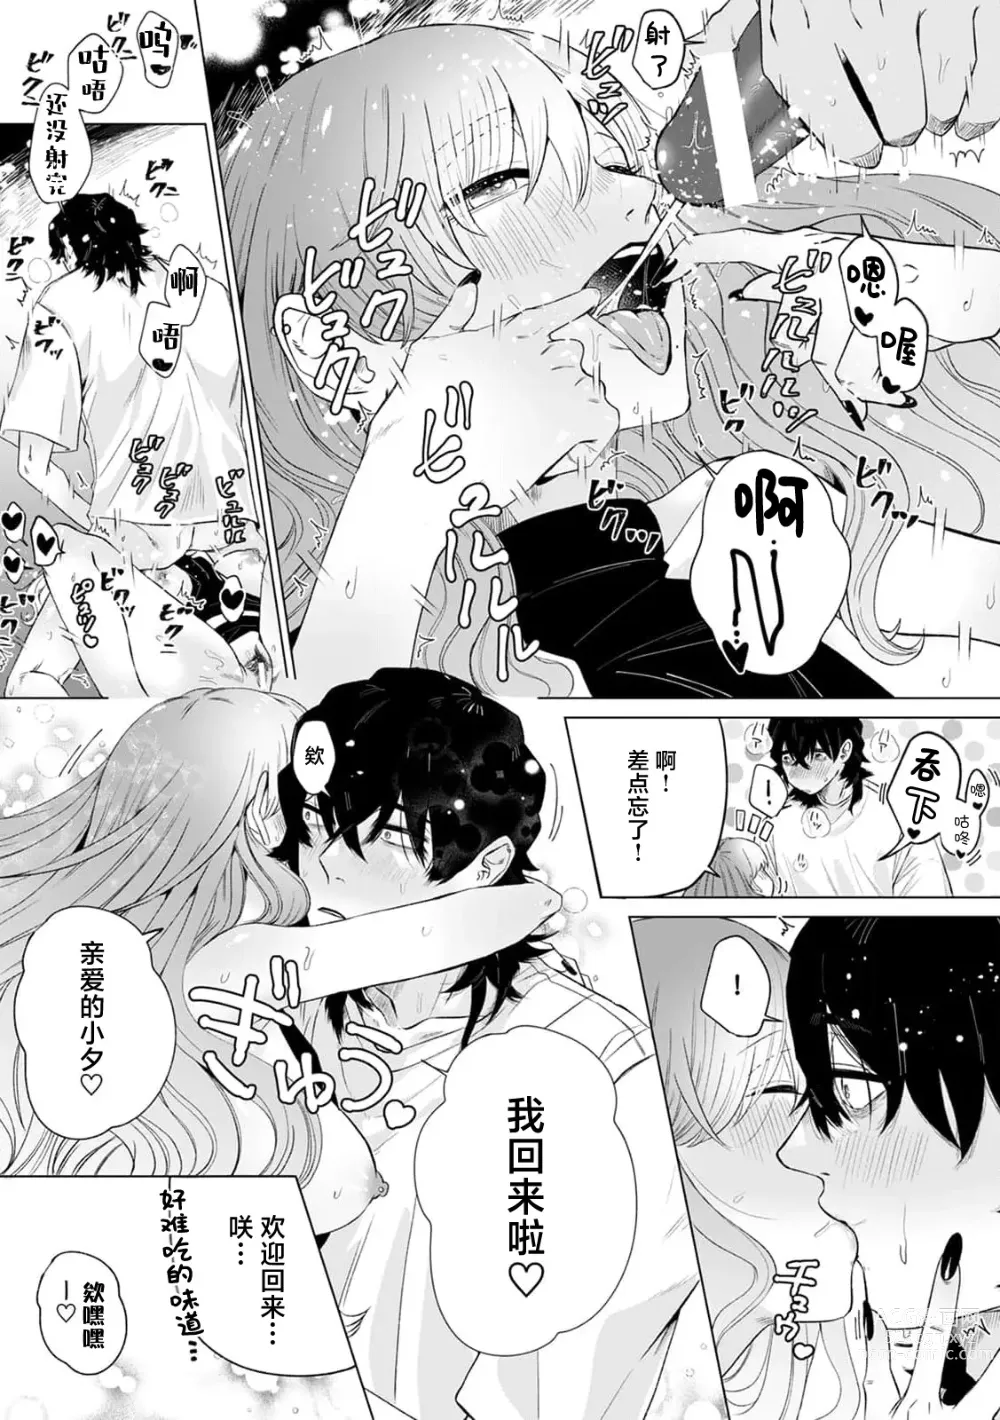 Page 9 of manga 你我二人、深陷发情之沼。